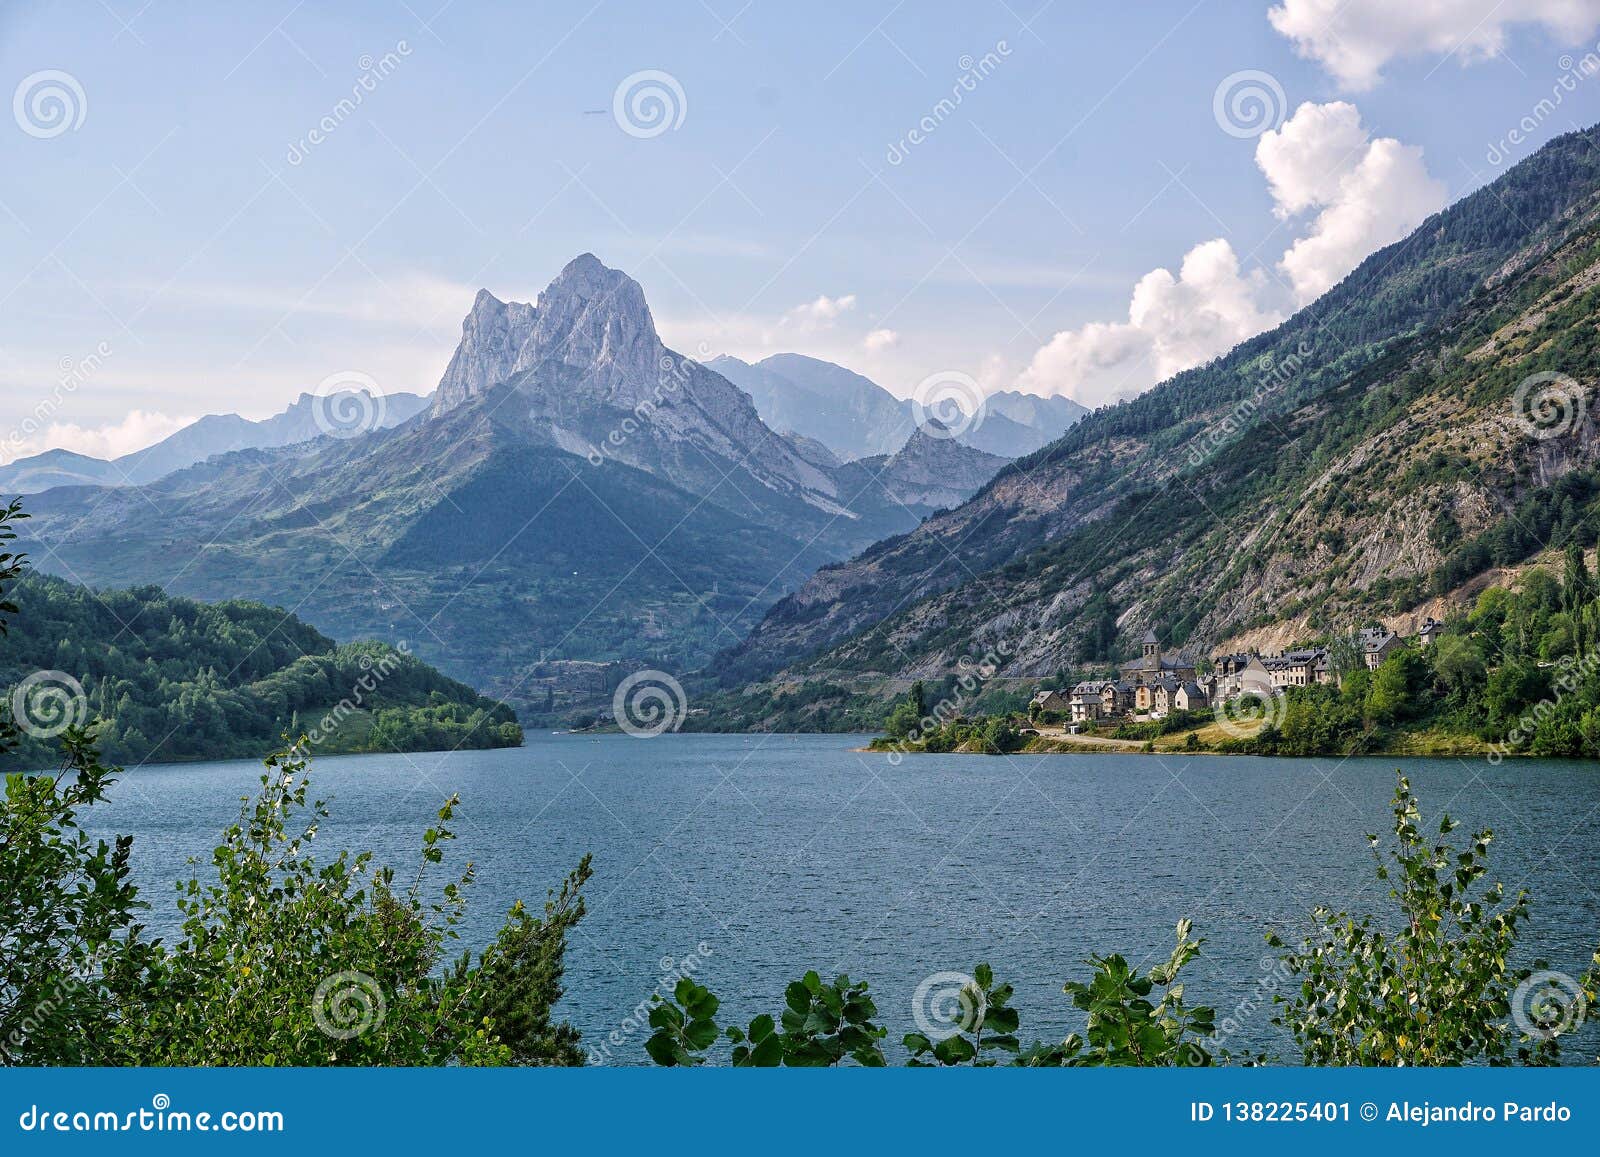 lake in pirineos mountains, spain.